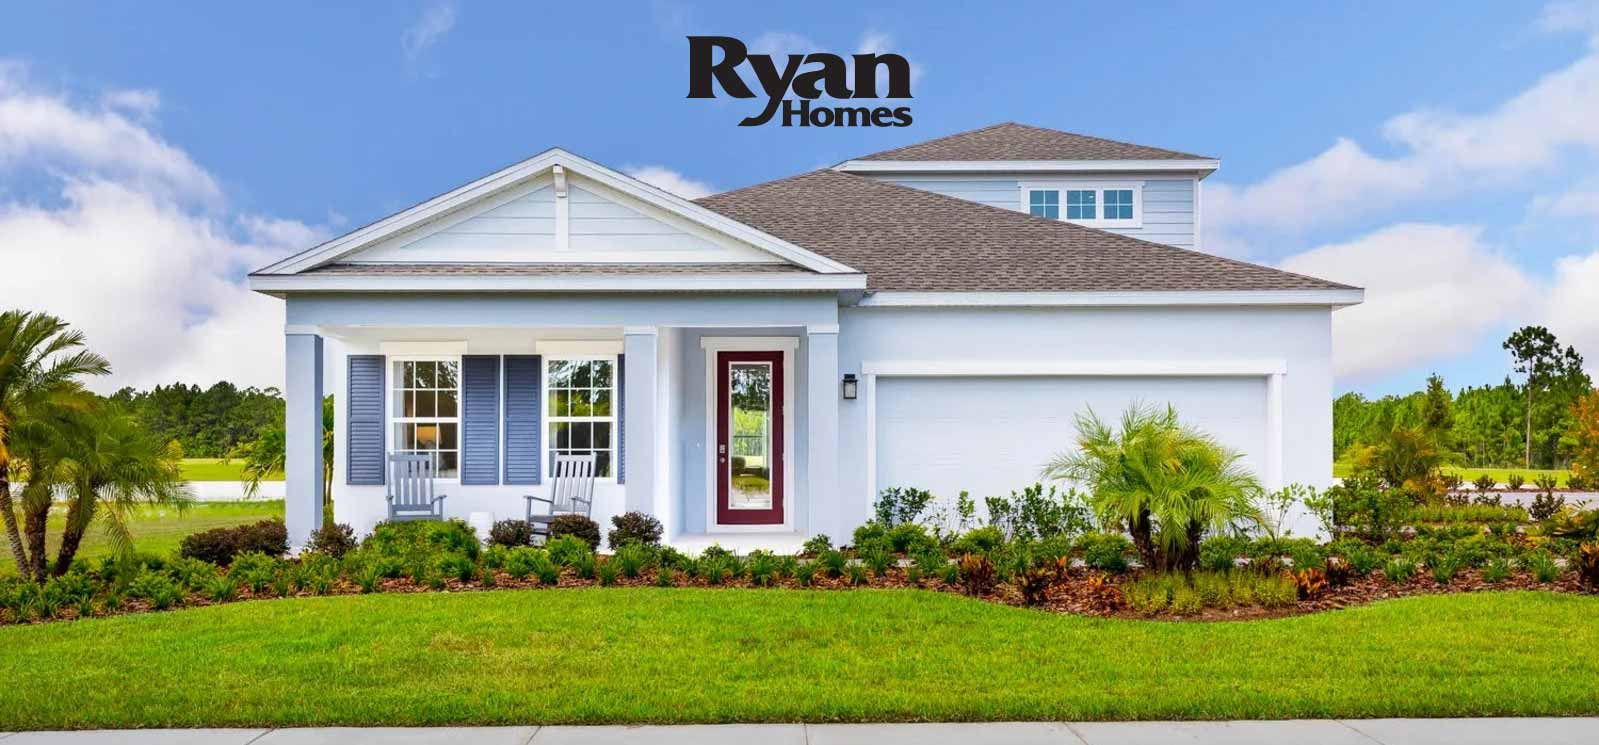 Ryan Homes & FLoorplan at Central Park St. Lucie FL